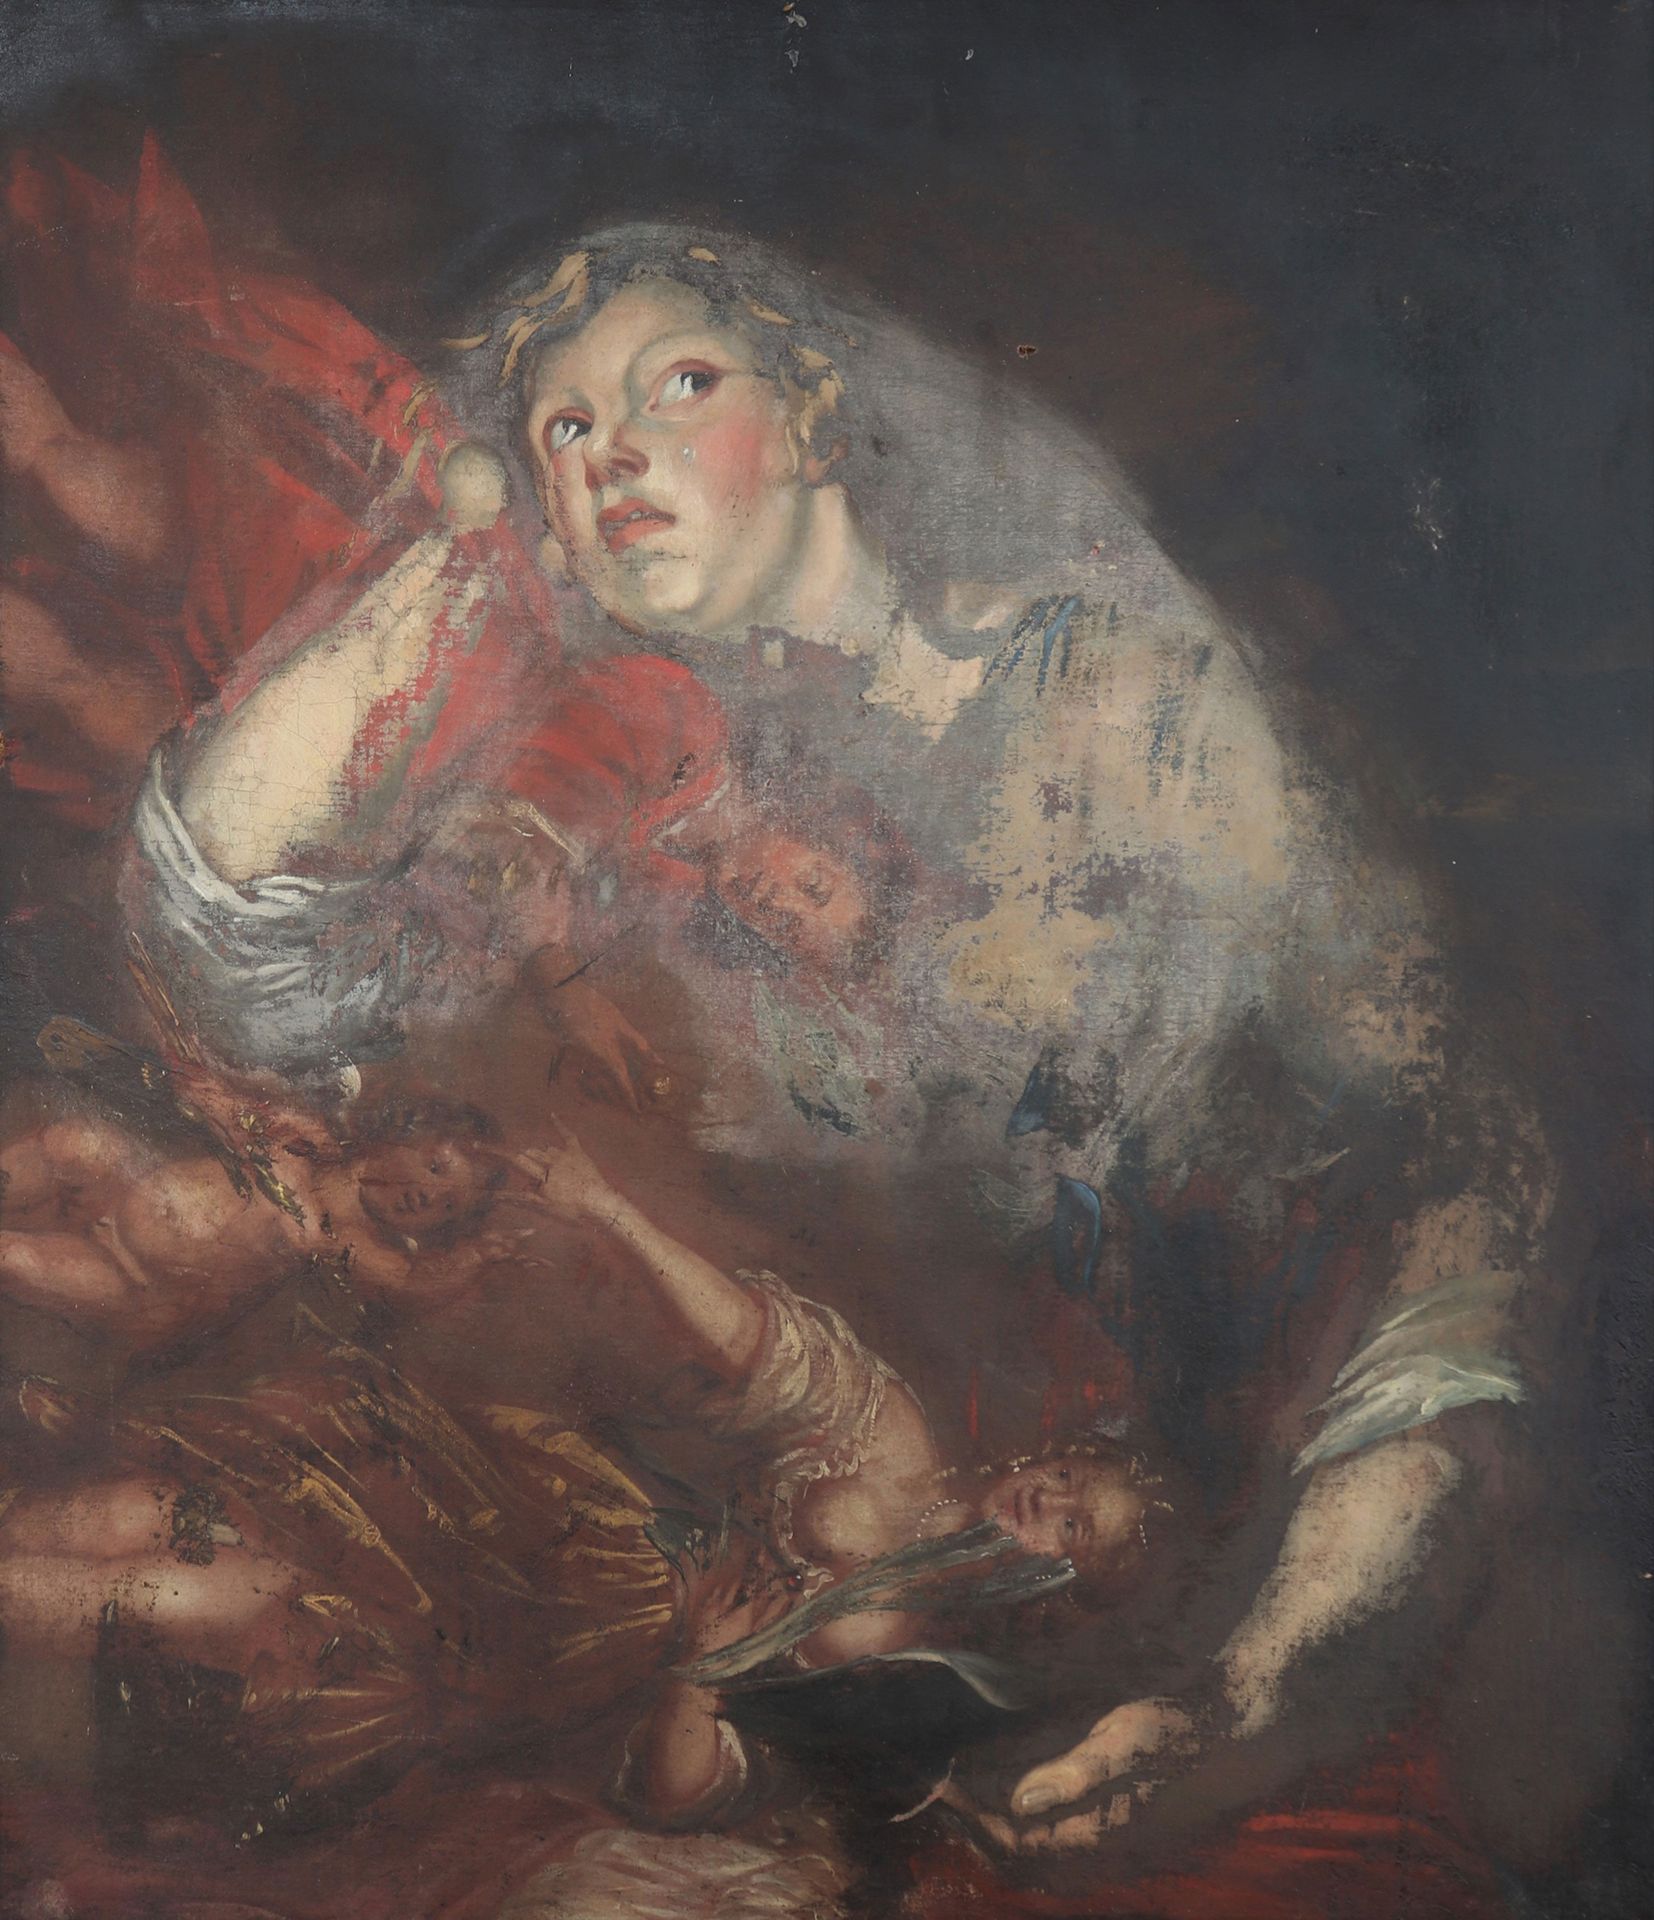 Huile sur toile 17ème école de Rubens Olio su tela 17th Rubens School
Dimensioni&hellip;